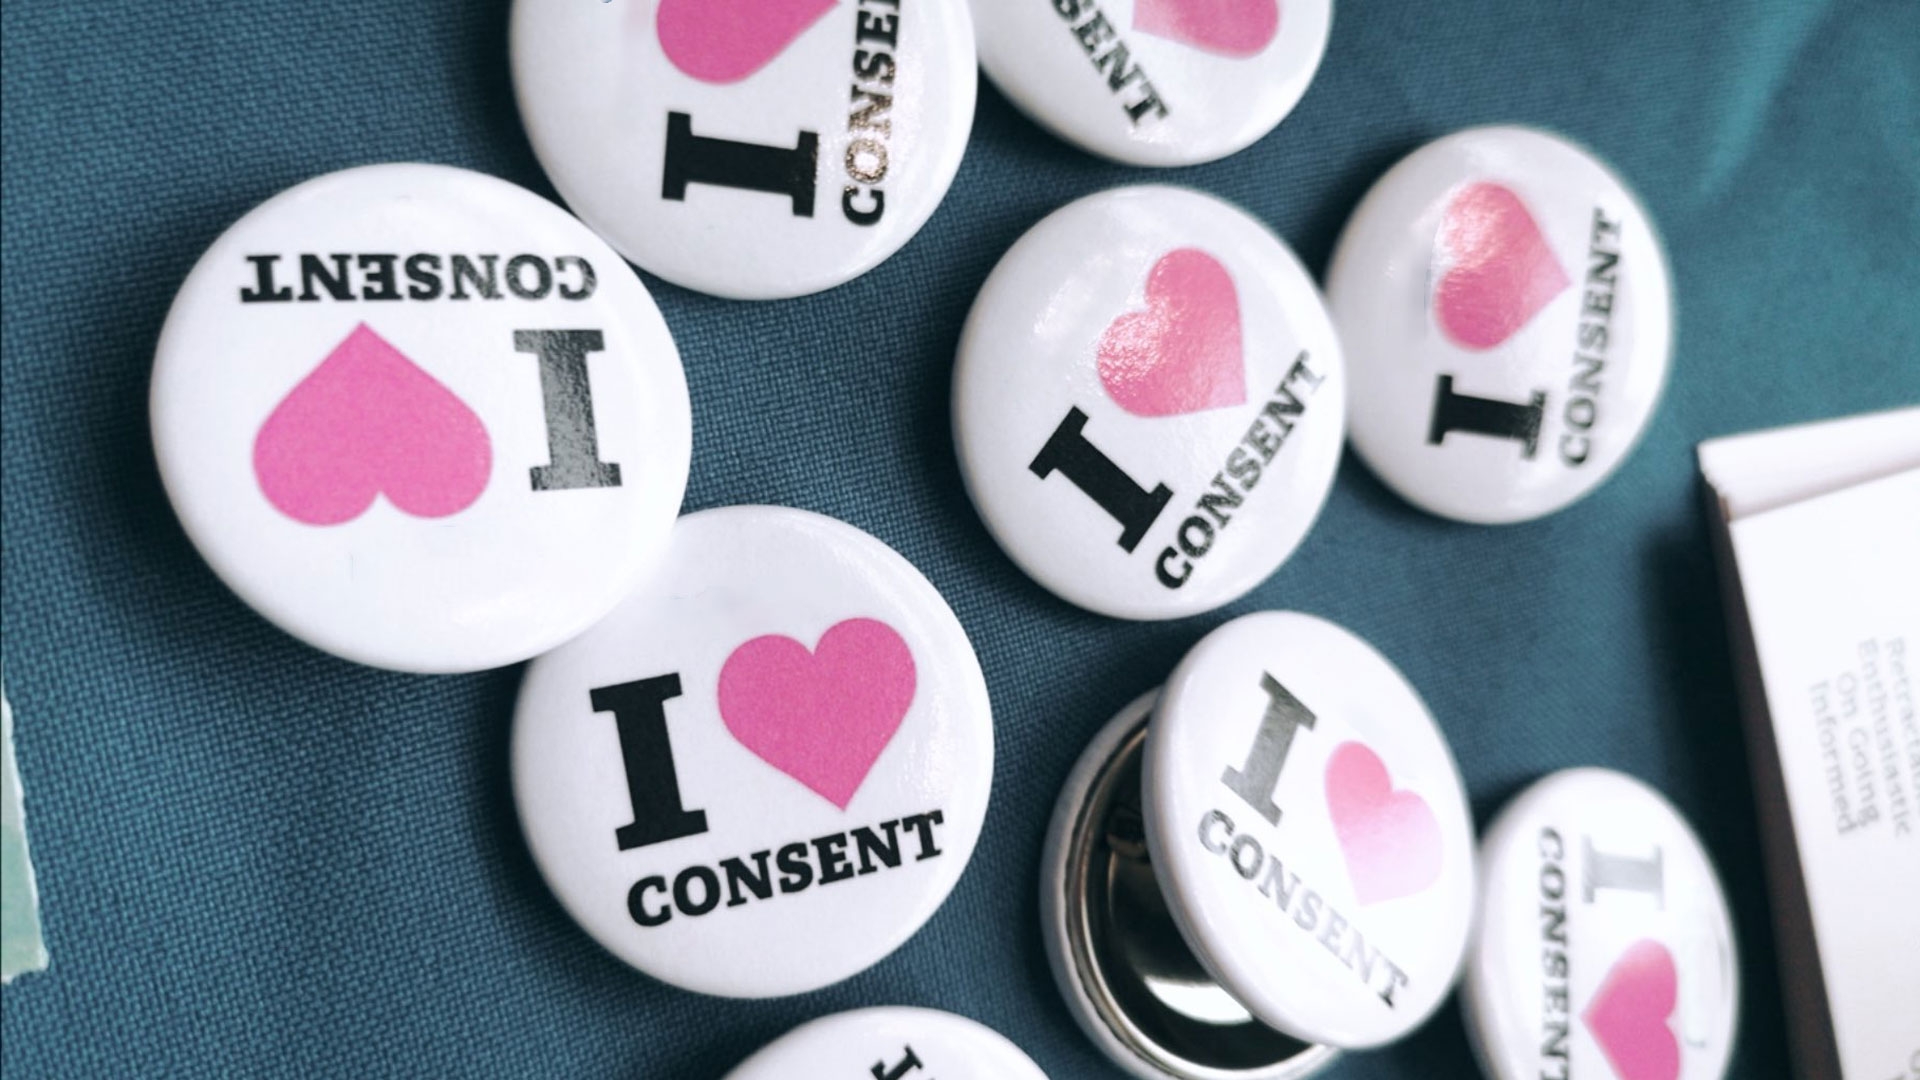 I Love Consent pins